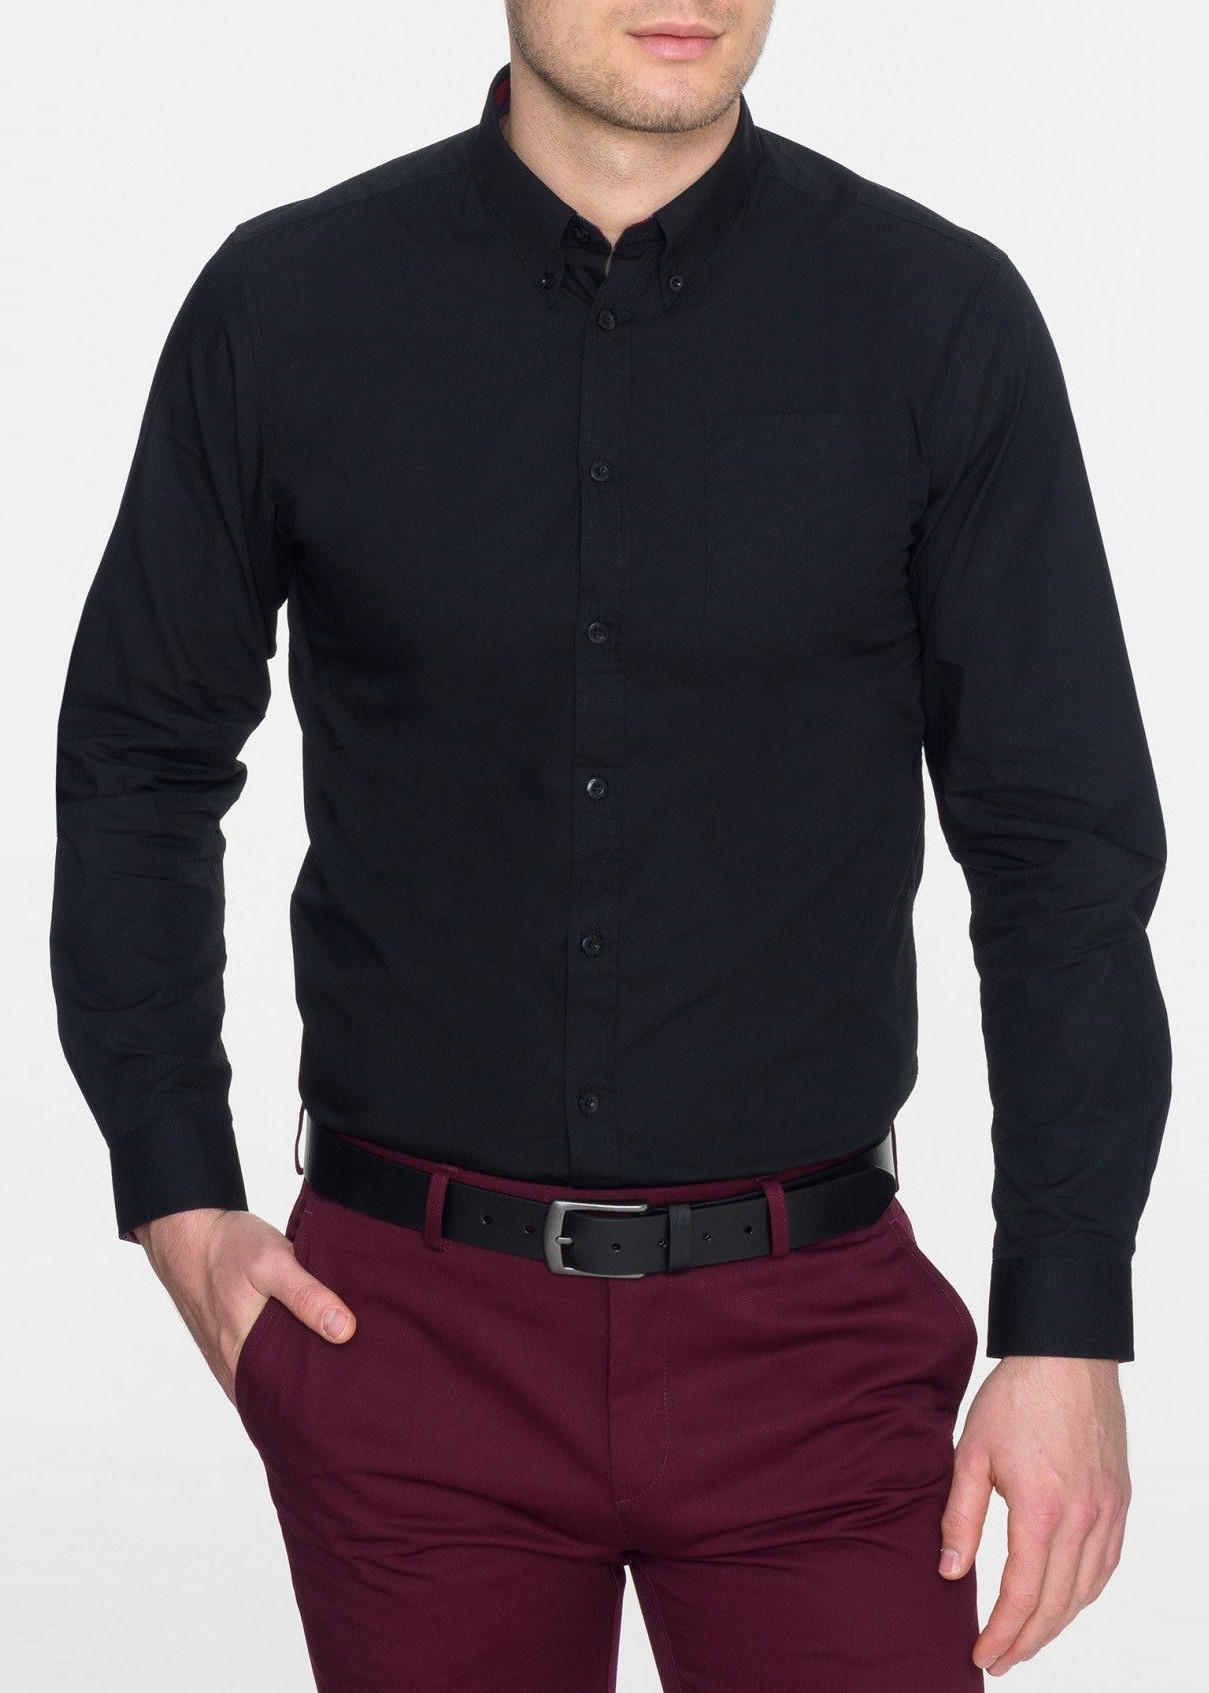 Рубашка Merc Albin, black (черная)